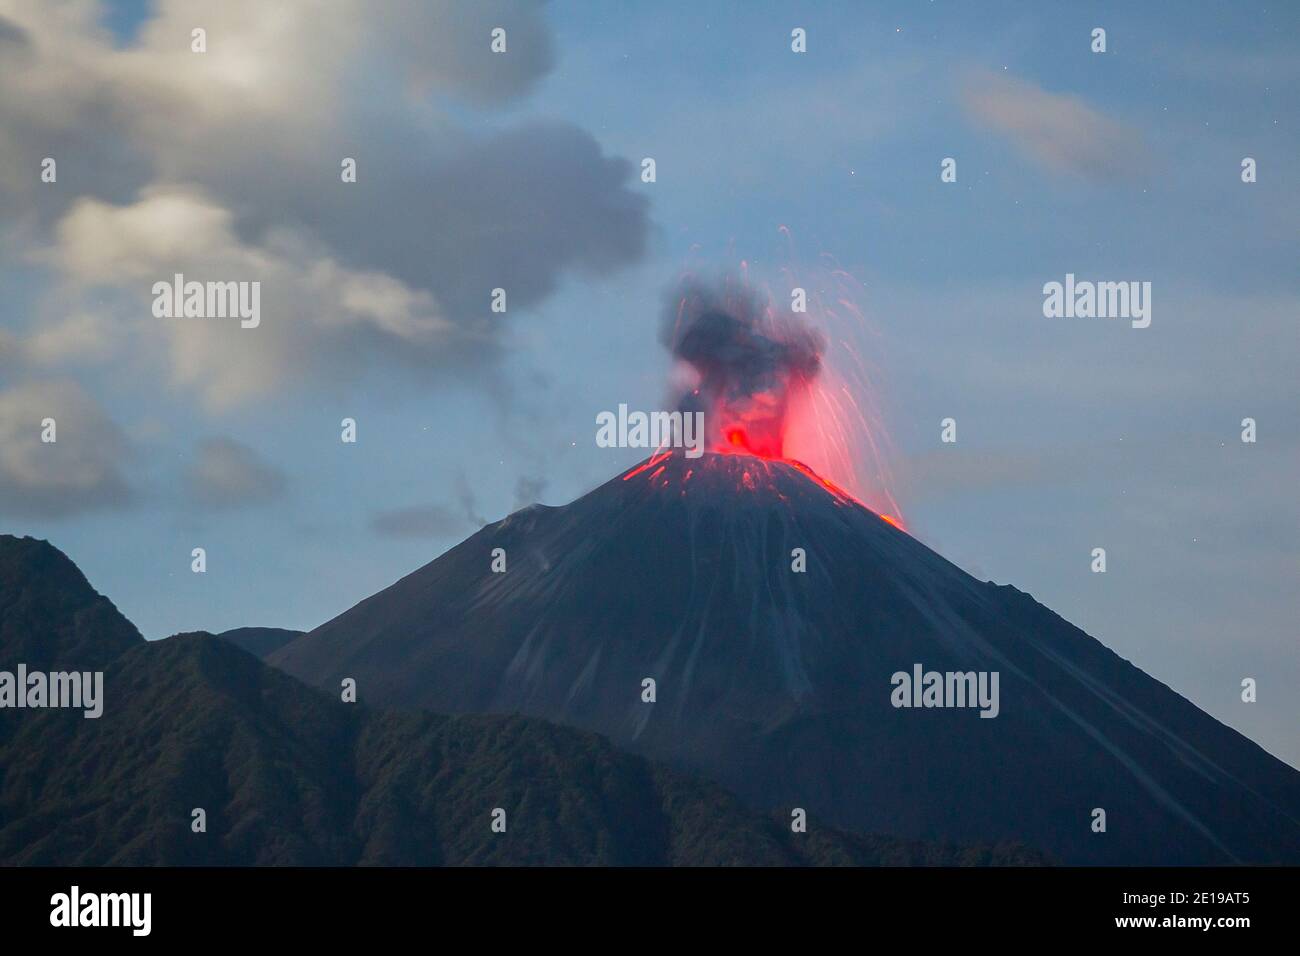 Reventador Volcano, Ecuador erupting at night, November 2015. Red hot rocks and gas are thrown out of the crater. Reventador rises out of tropical rai Stock Photo